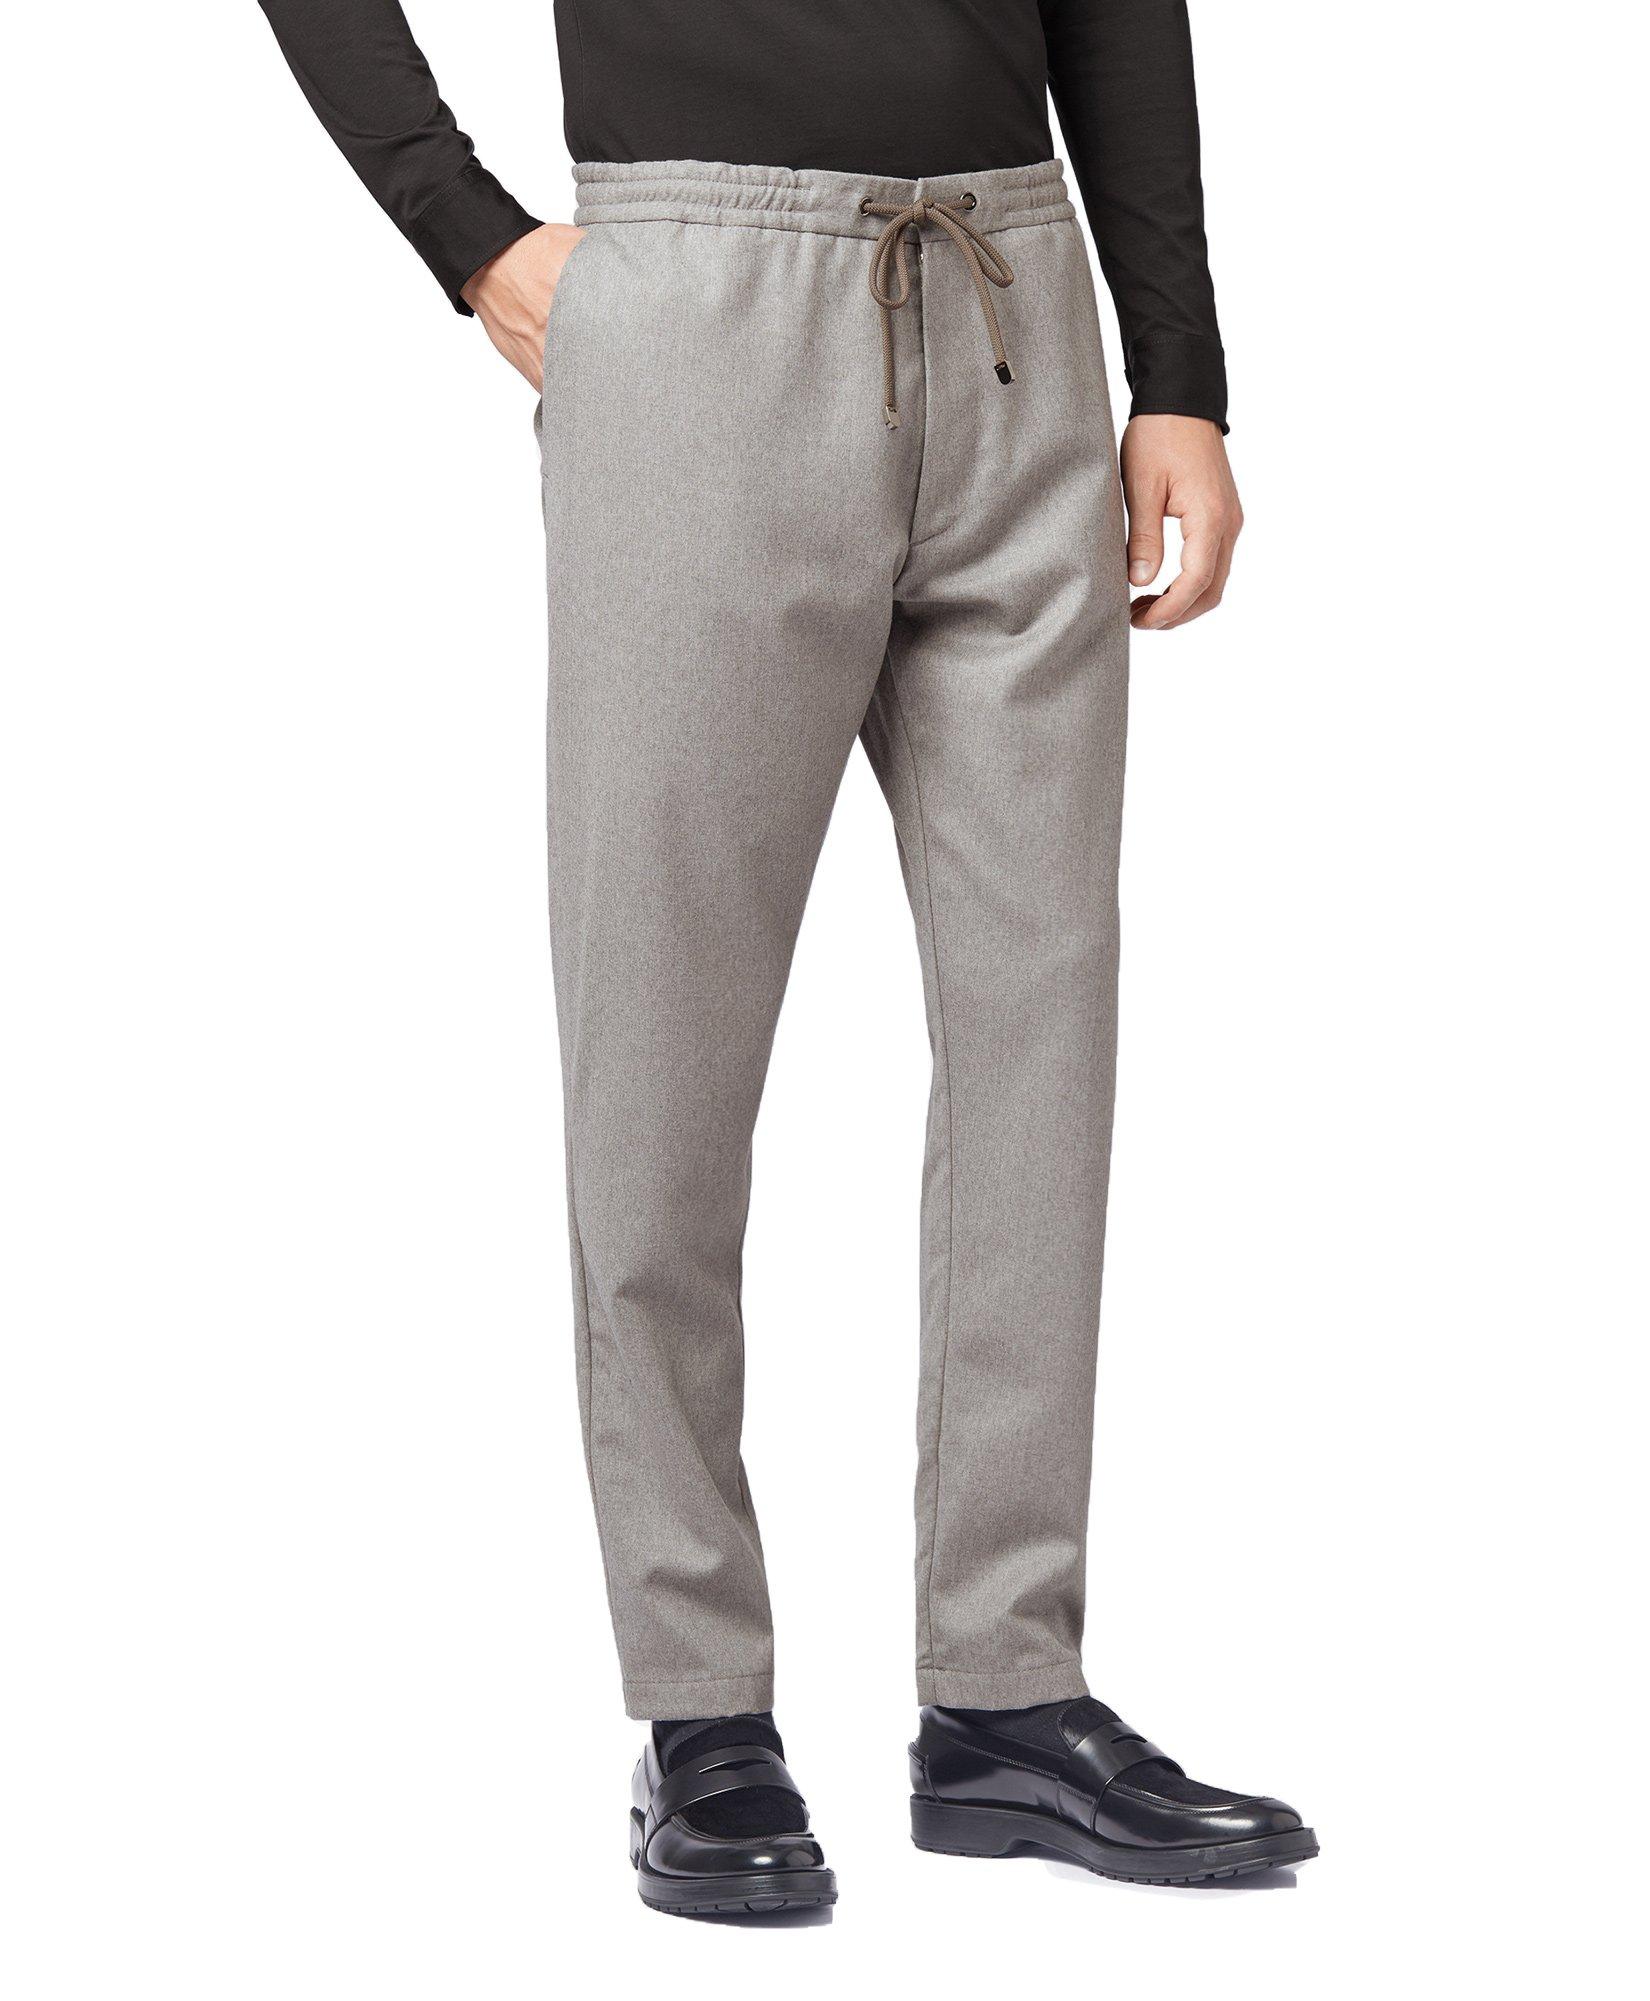 Kirio Drawstring Trousers image 3